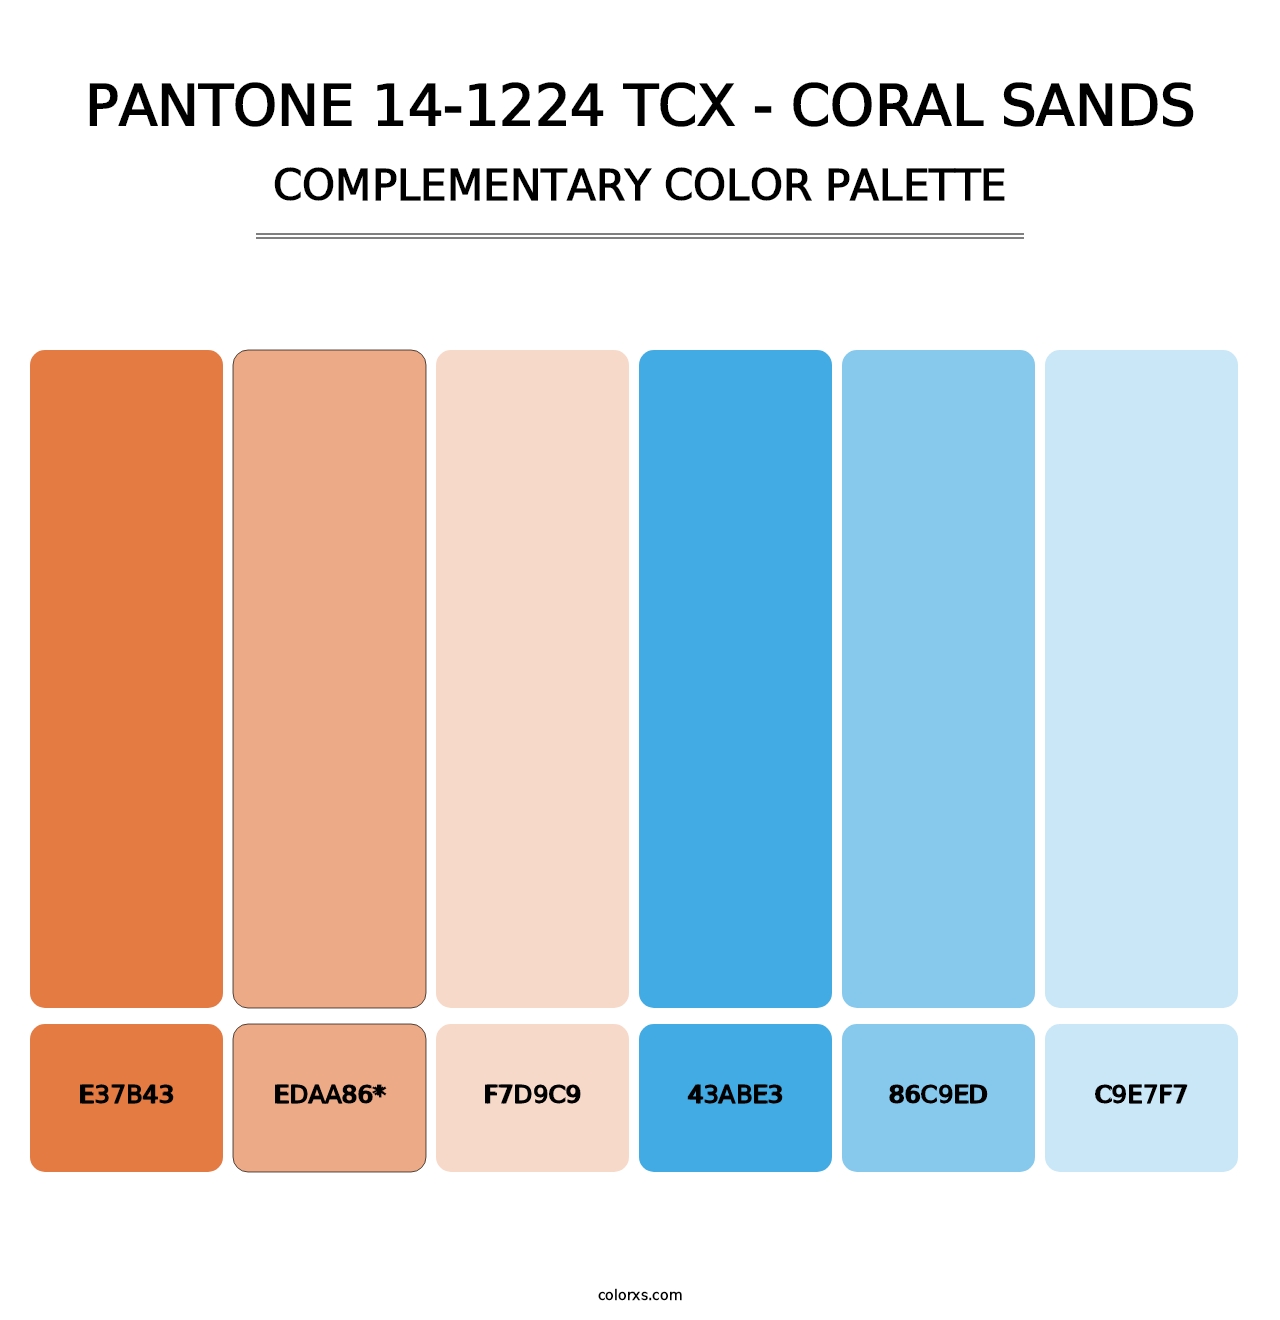 PANTONE 14-1224 TCX - Coral Sands - Complementary Color Palette